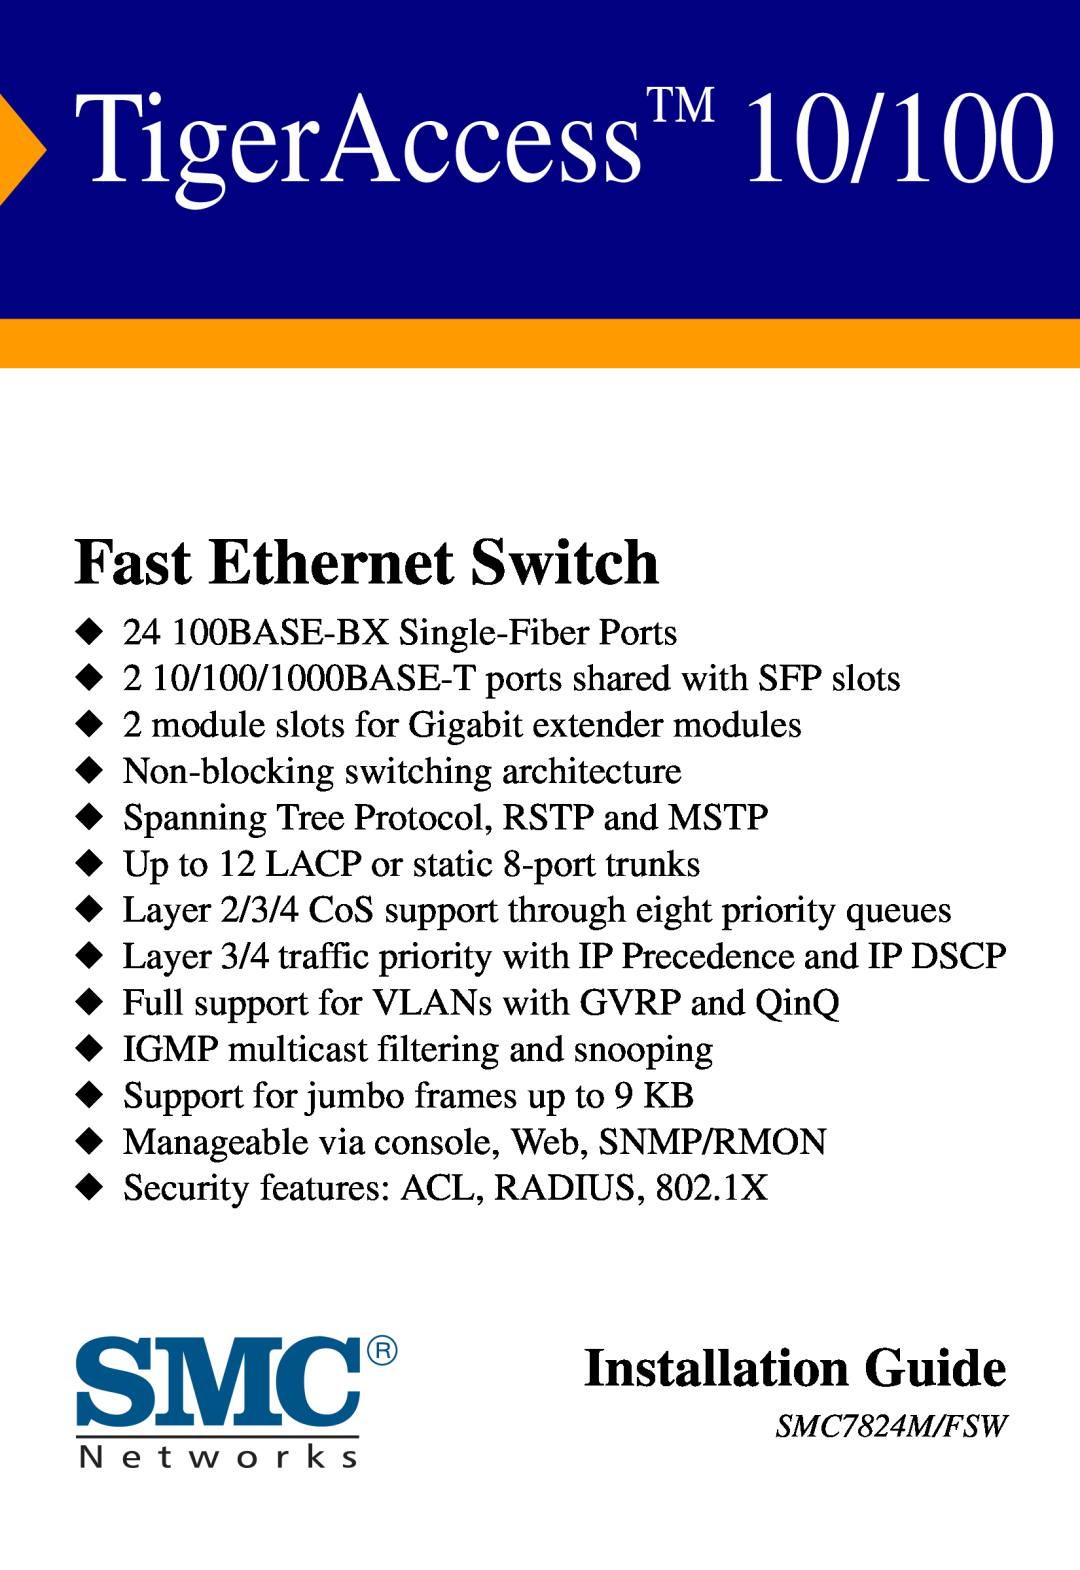 SMC Networks SMC7824M/FSW manual Fast Ethernet Switch, TigerAccess 10/100, Installation Guide 